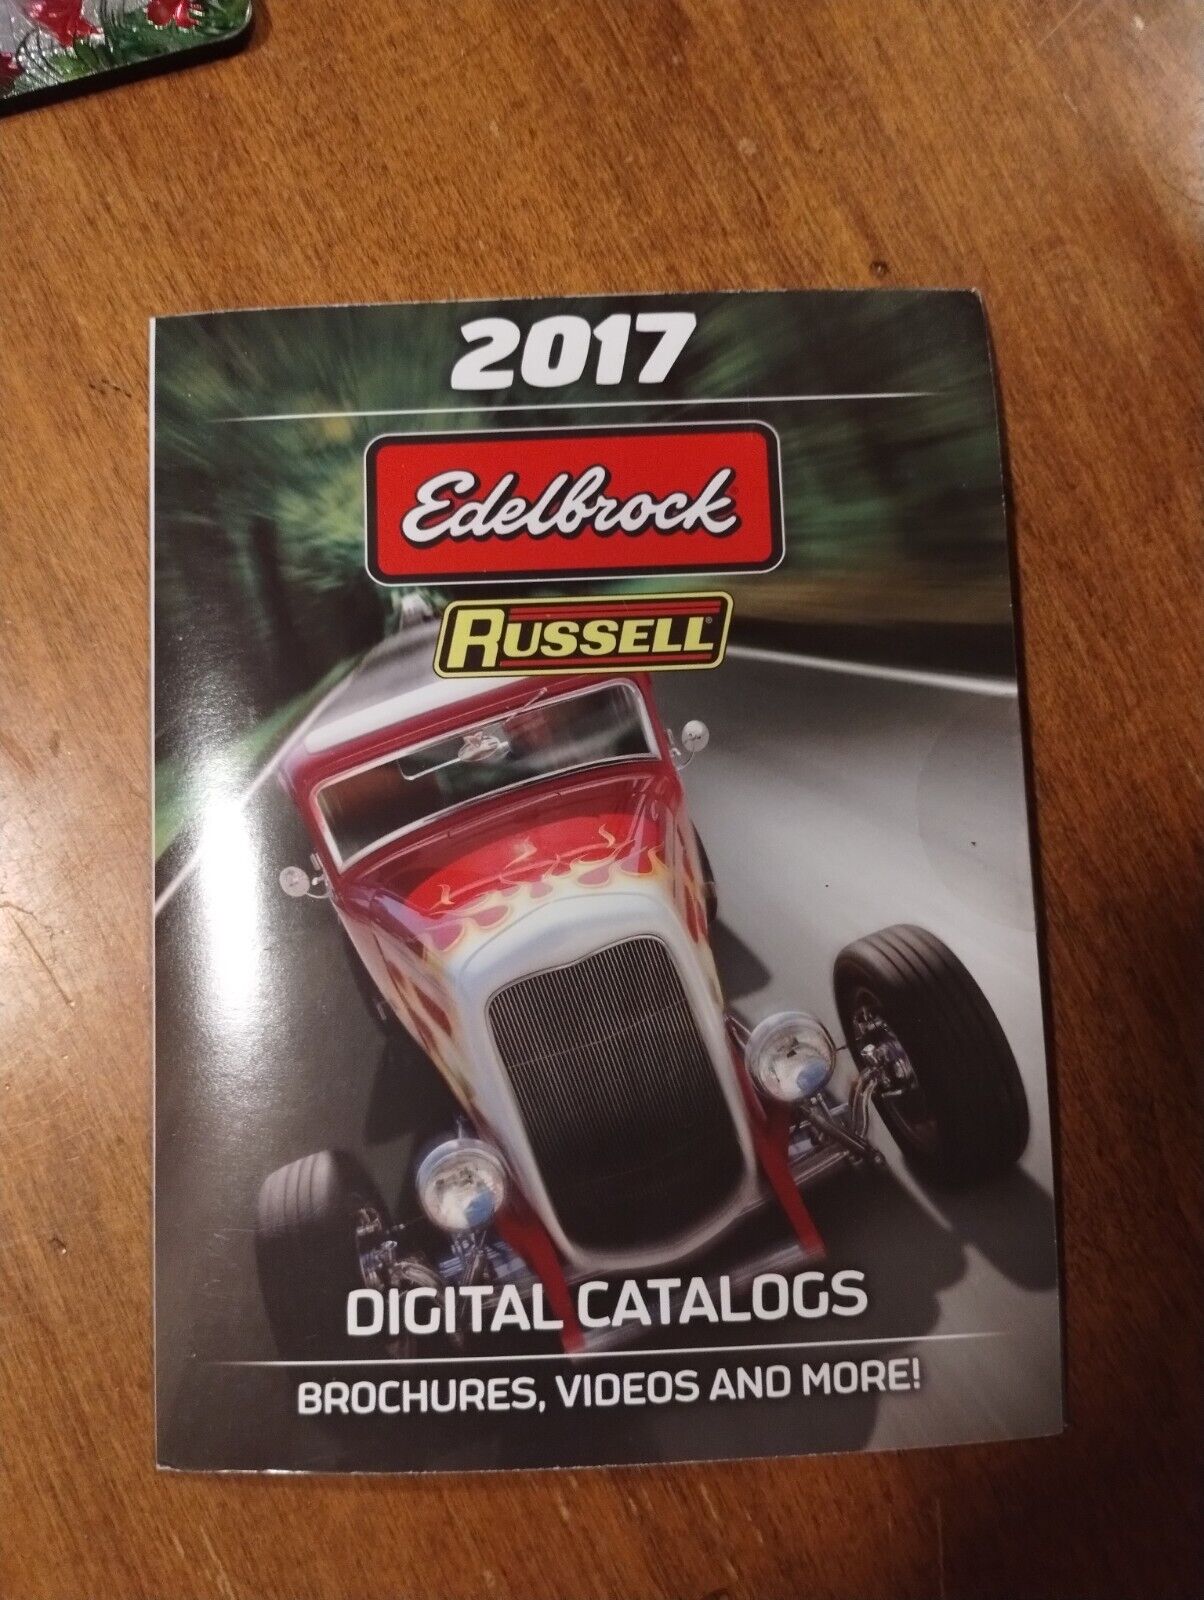 2017 Edelbrock Digital Catalog